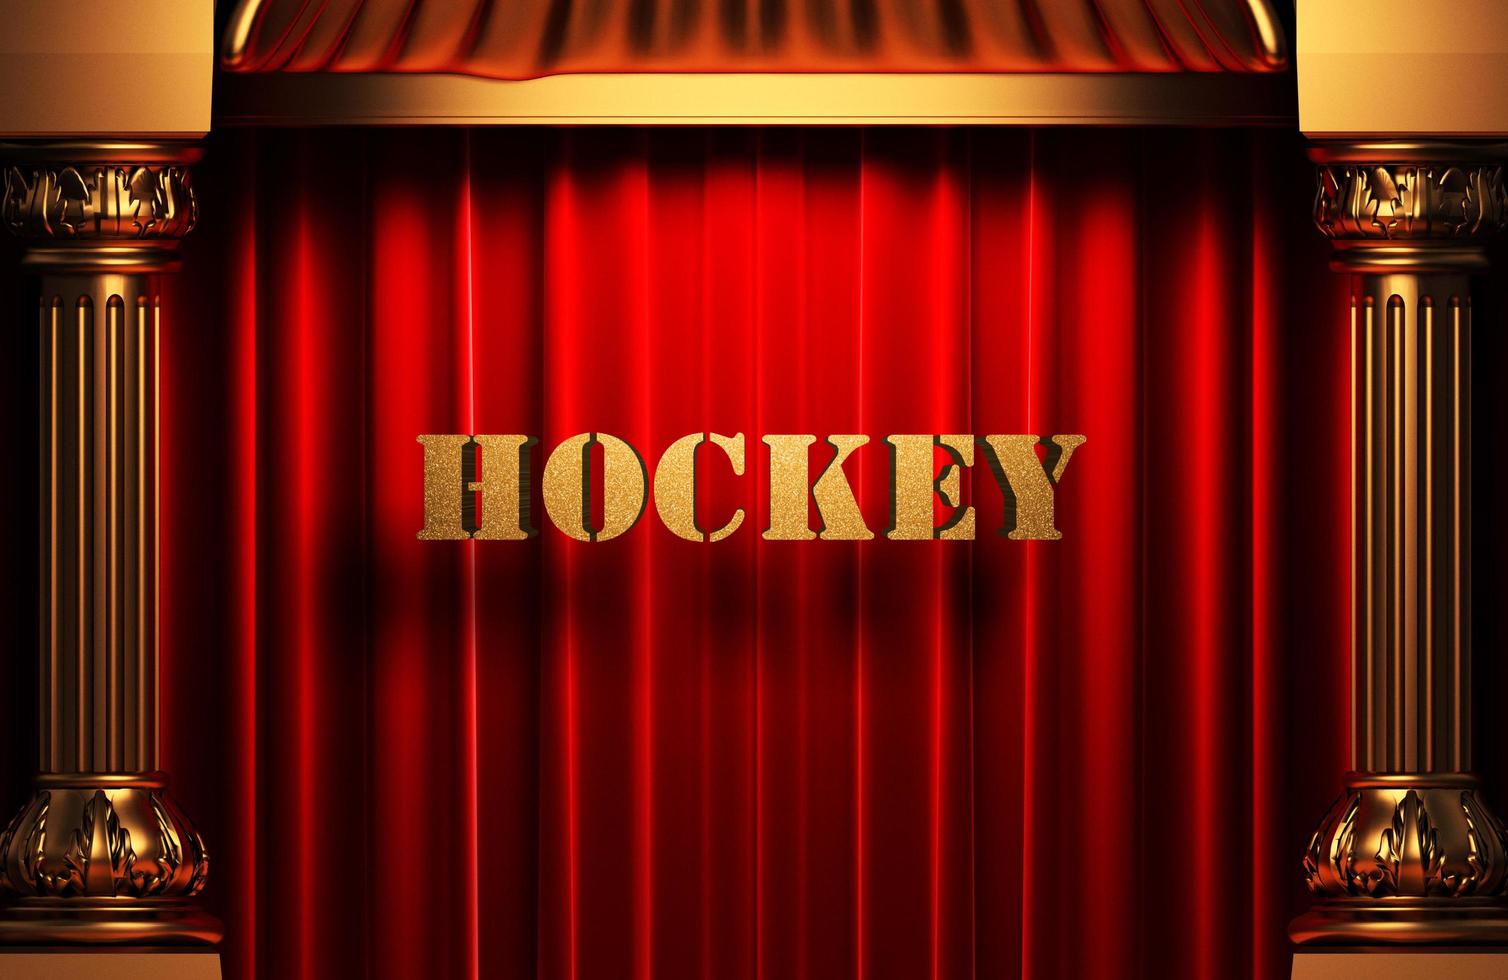 palabra dorada de hockey sobre cortina roja foto